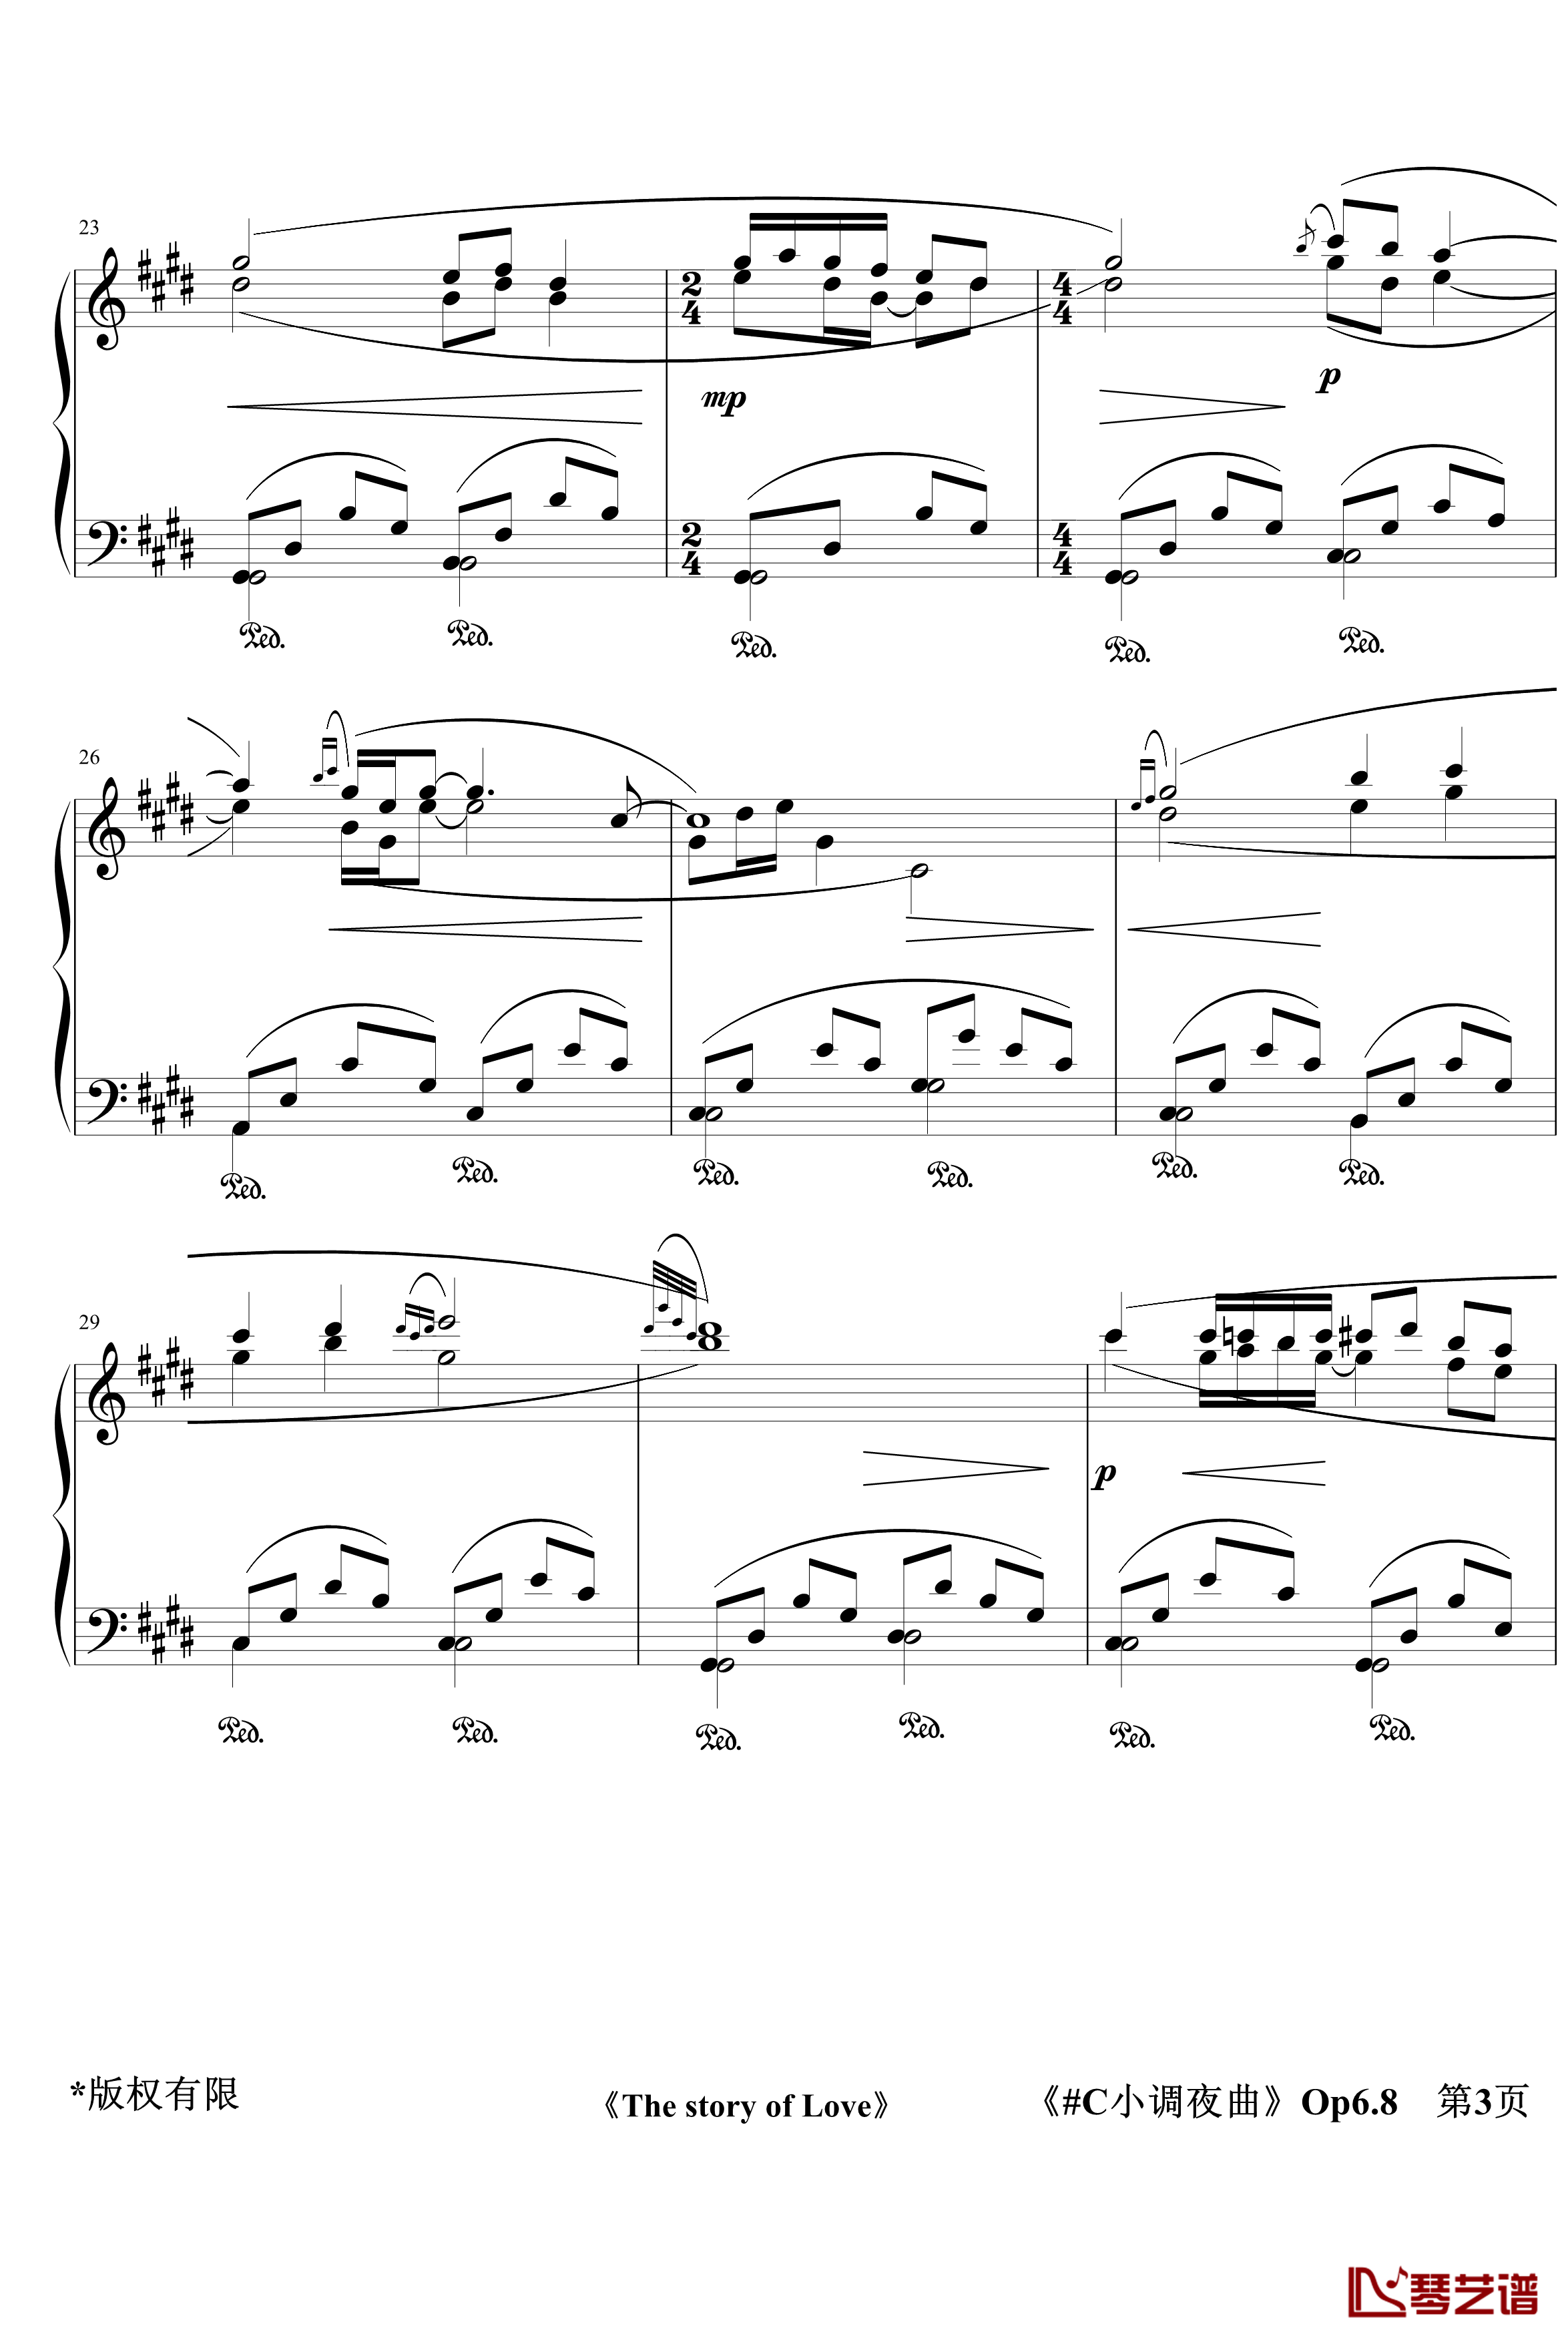 C小调夜曲Op6.8钢琴谱-jerry57433